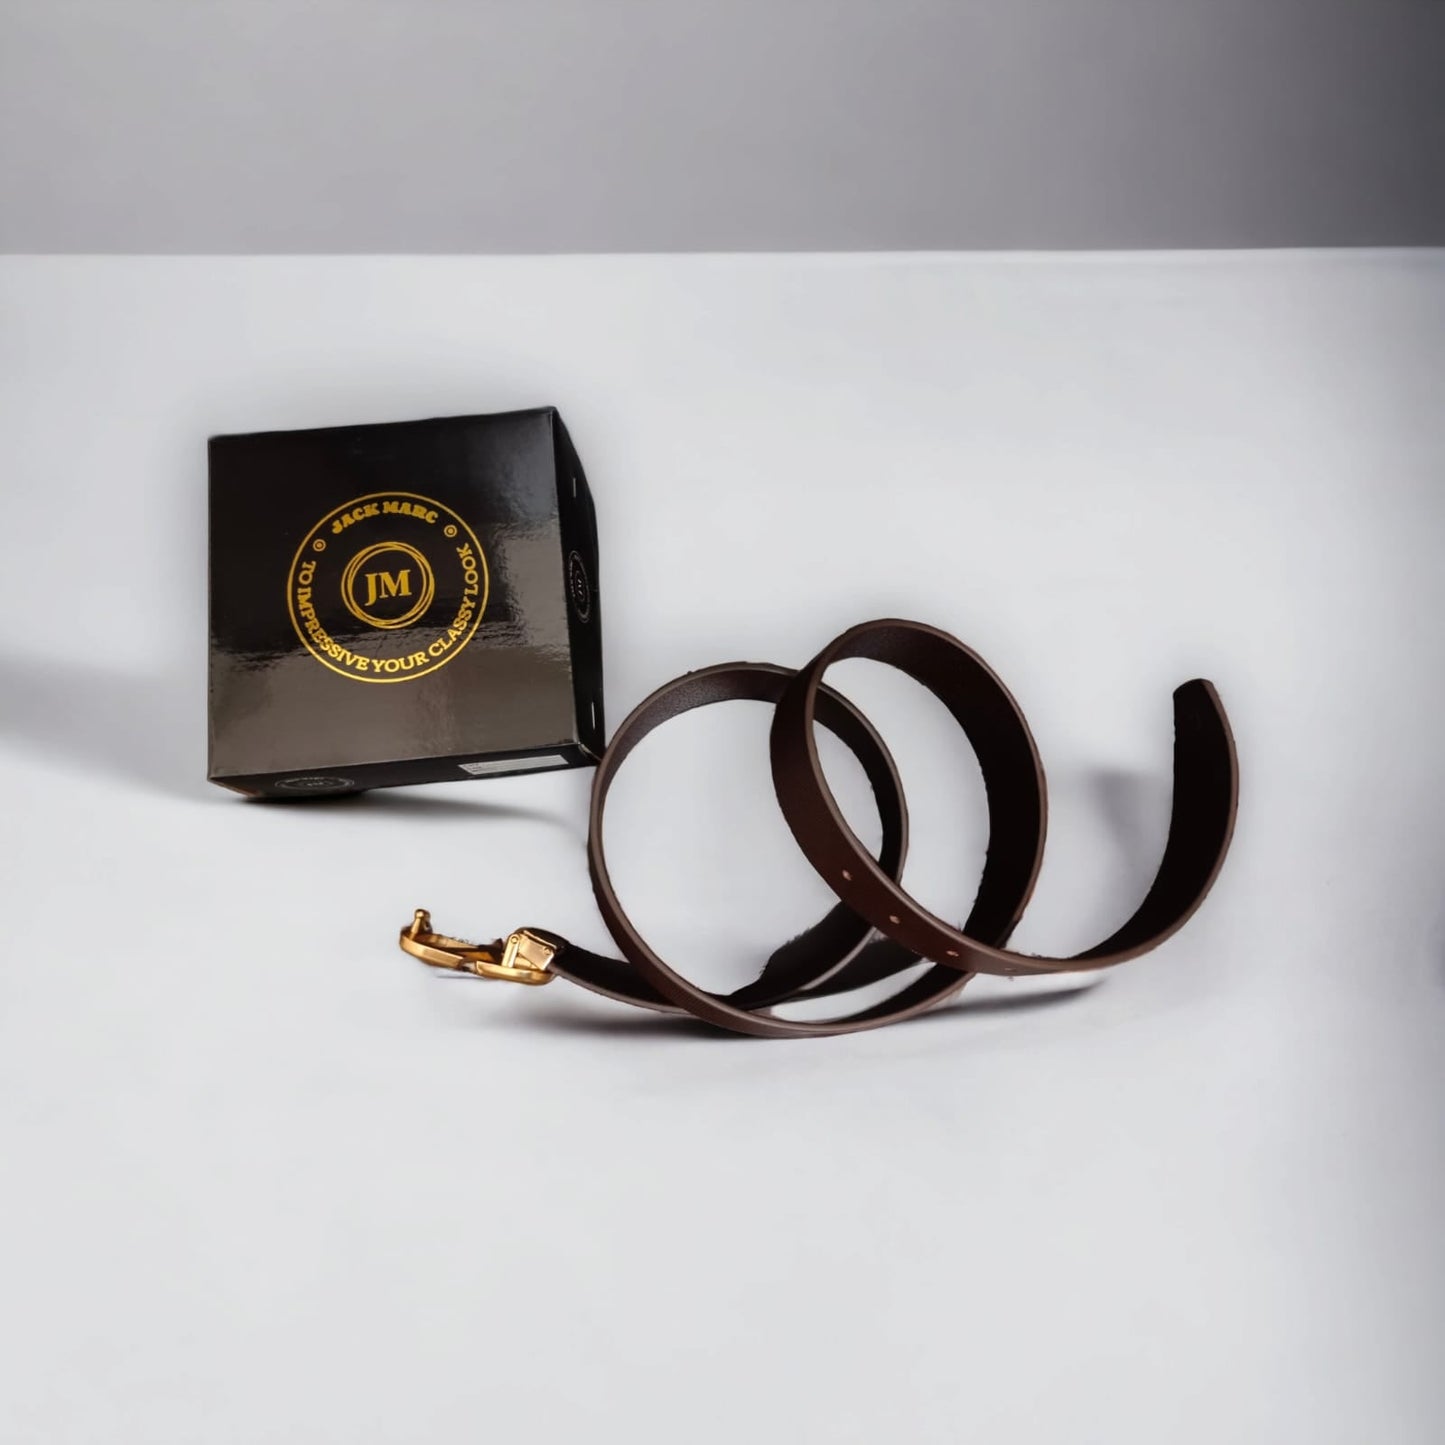 Brown Leather Belt For Men Casual & Office Wear